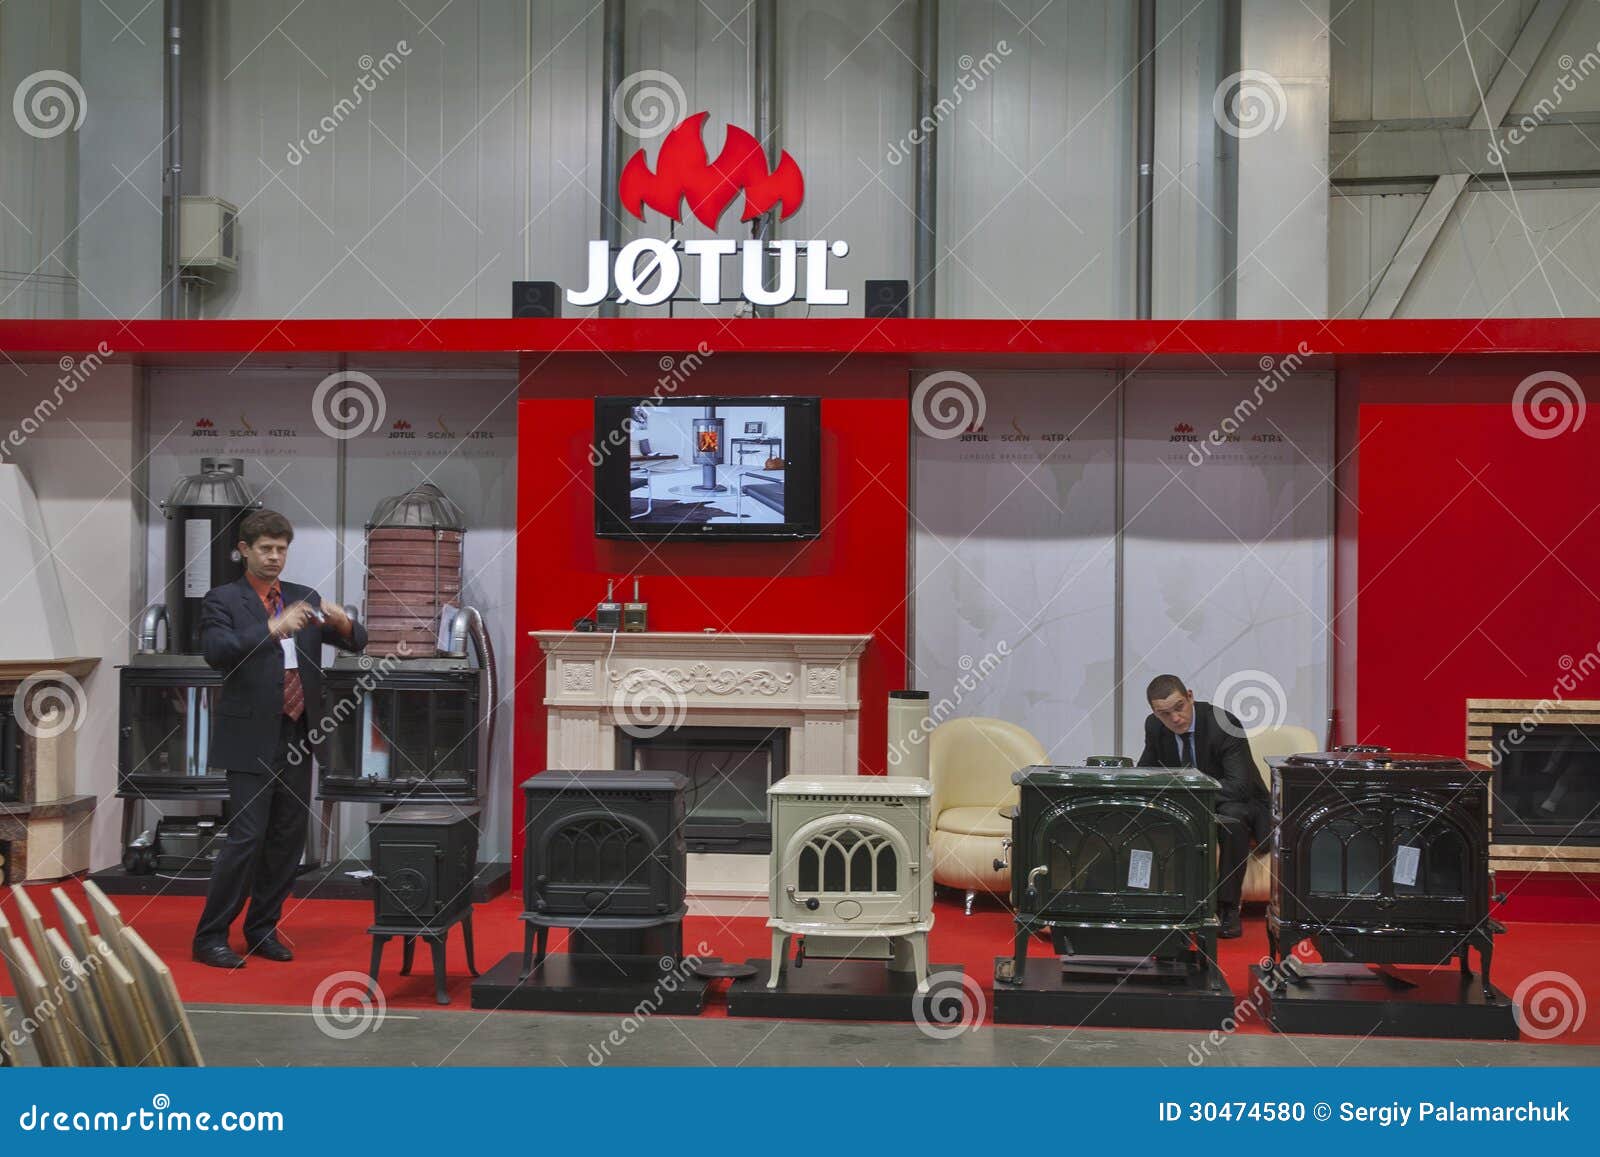 Jotul Norwegian Company Booth Image - Image of fireplace, exhibition: 30474580